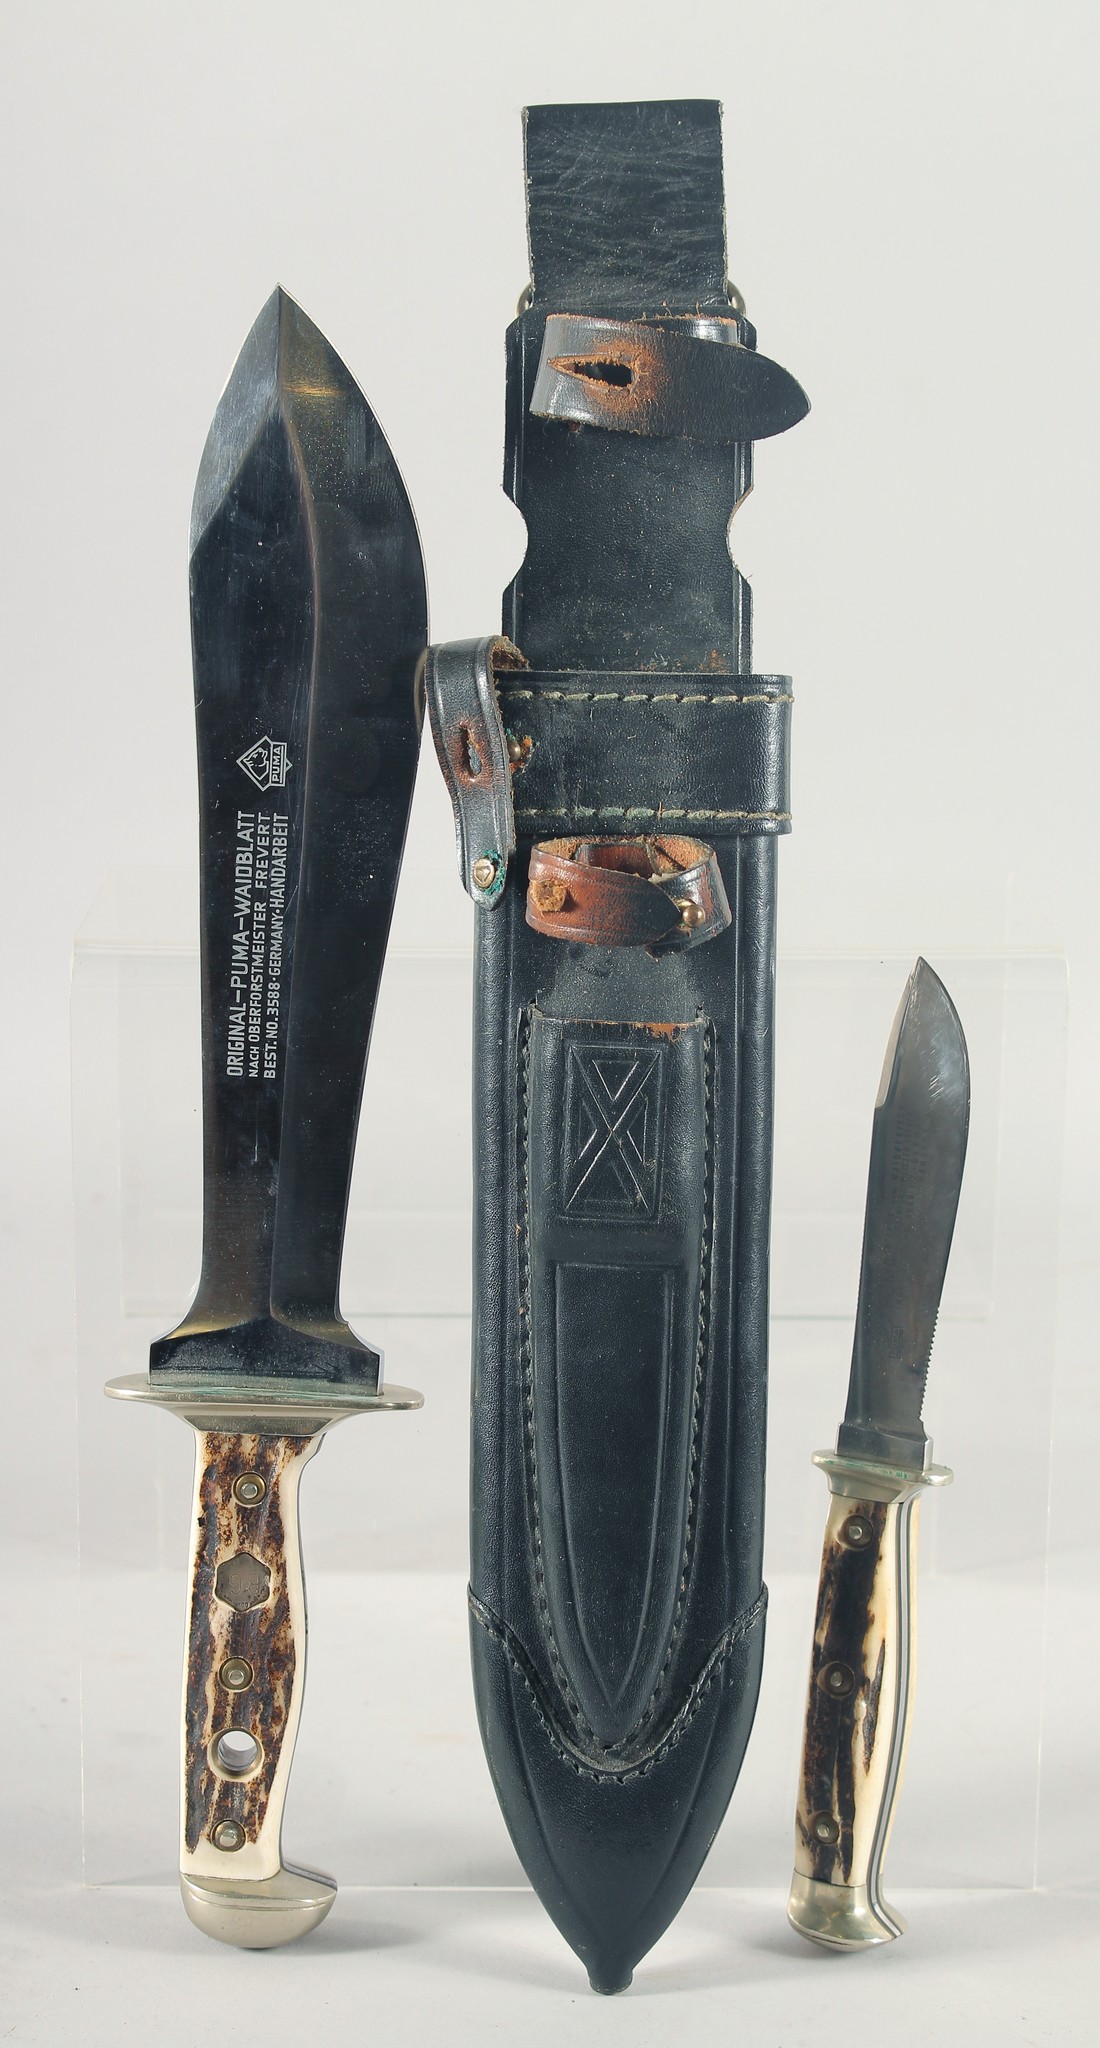 ORIGINAL-PUMA-WAIDBLATT KNIFE AND PUMA NIKER VOM WAIDBESTECK KNIFE, both with antler handles 12"